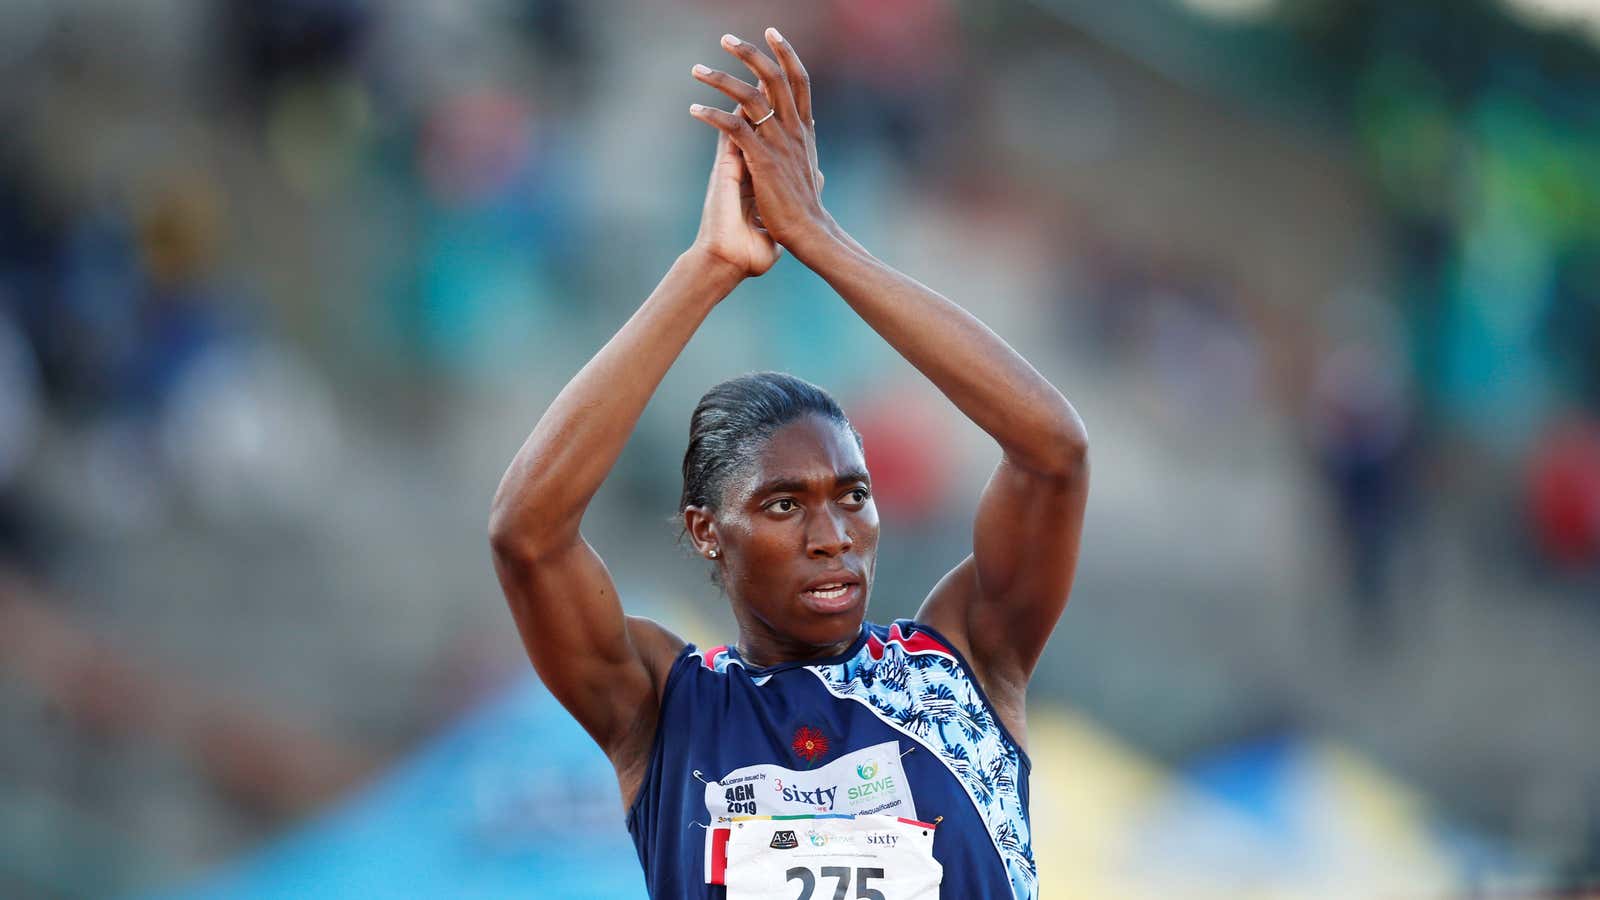 Olympian Caster Semenya Wins Legal Battle Over Testing of Her Testosterone